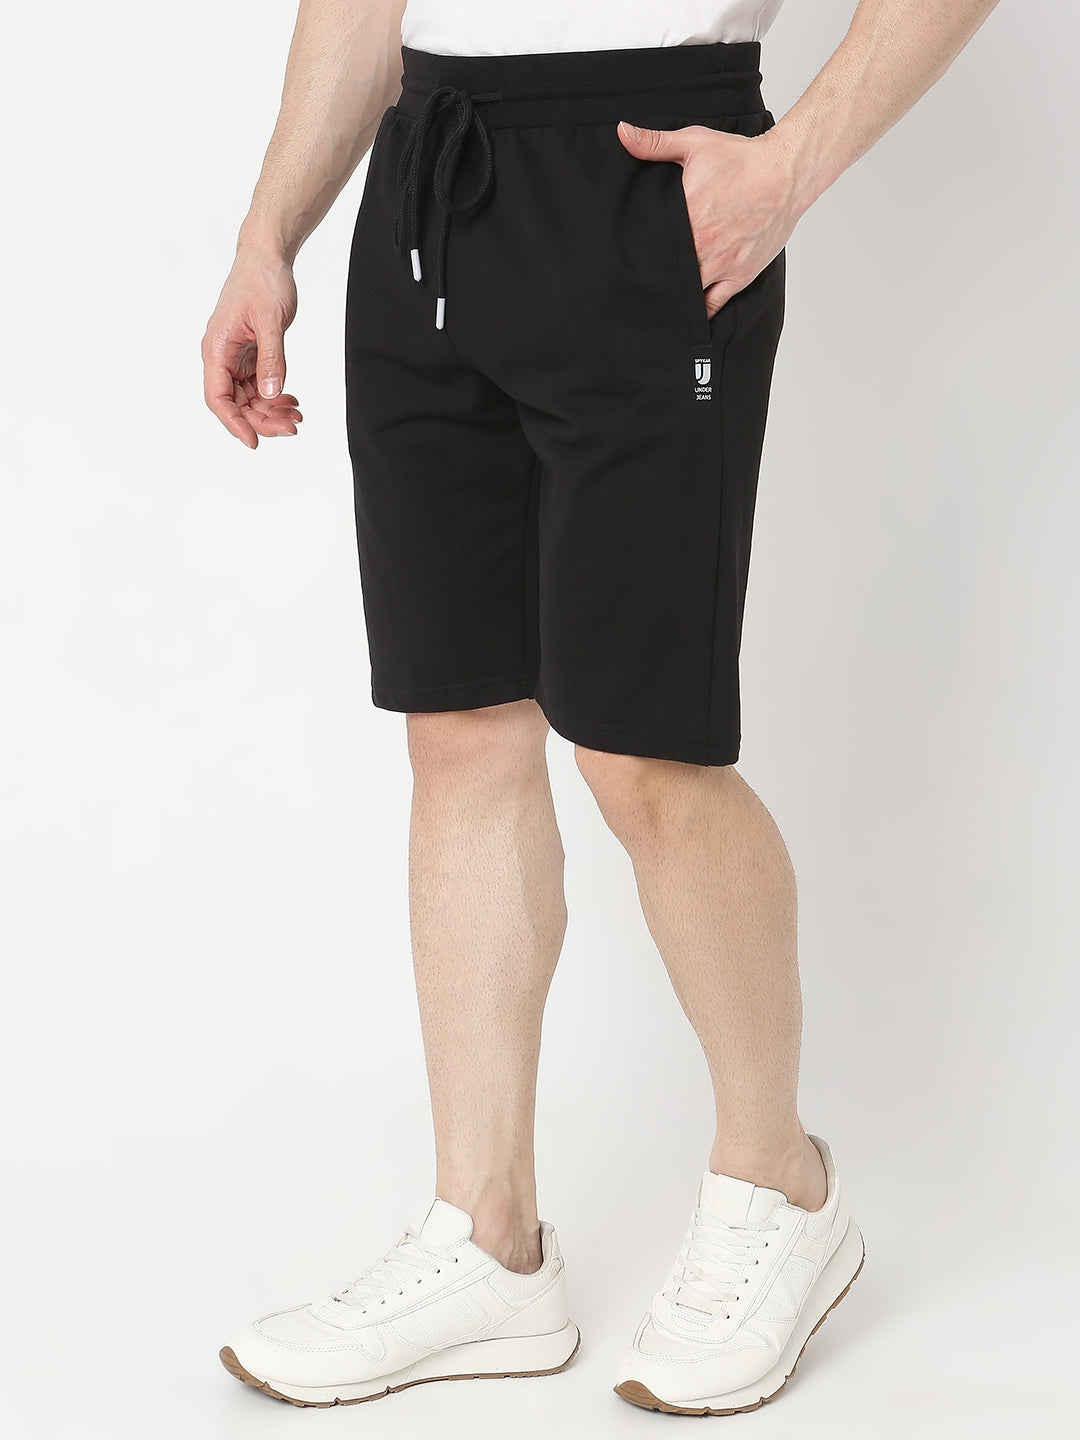 Underjeans by Spykar Men Premium Knitted Black Shorts